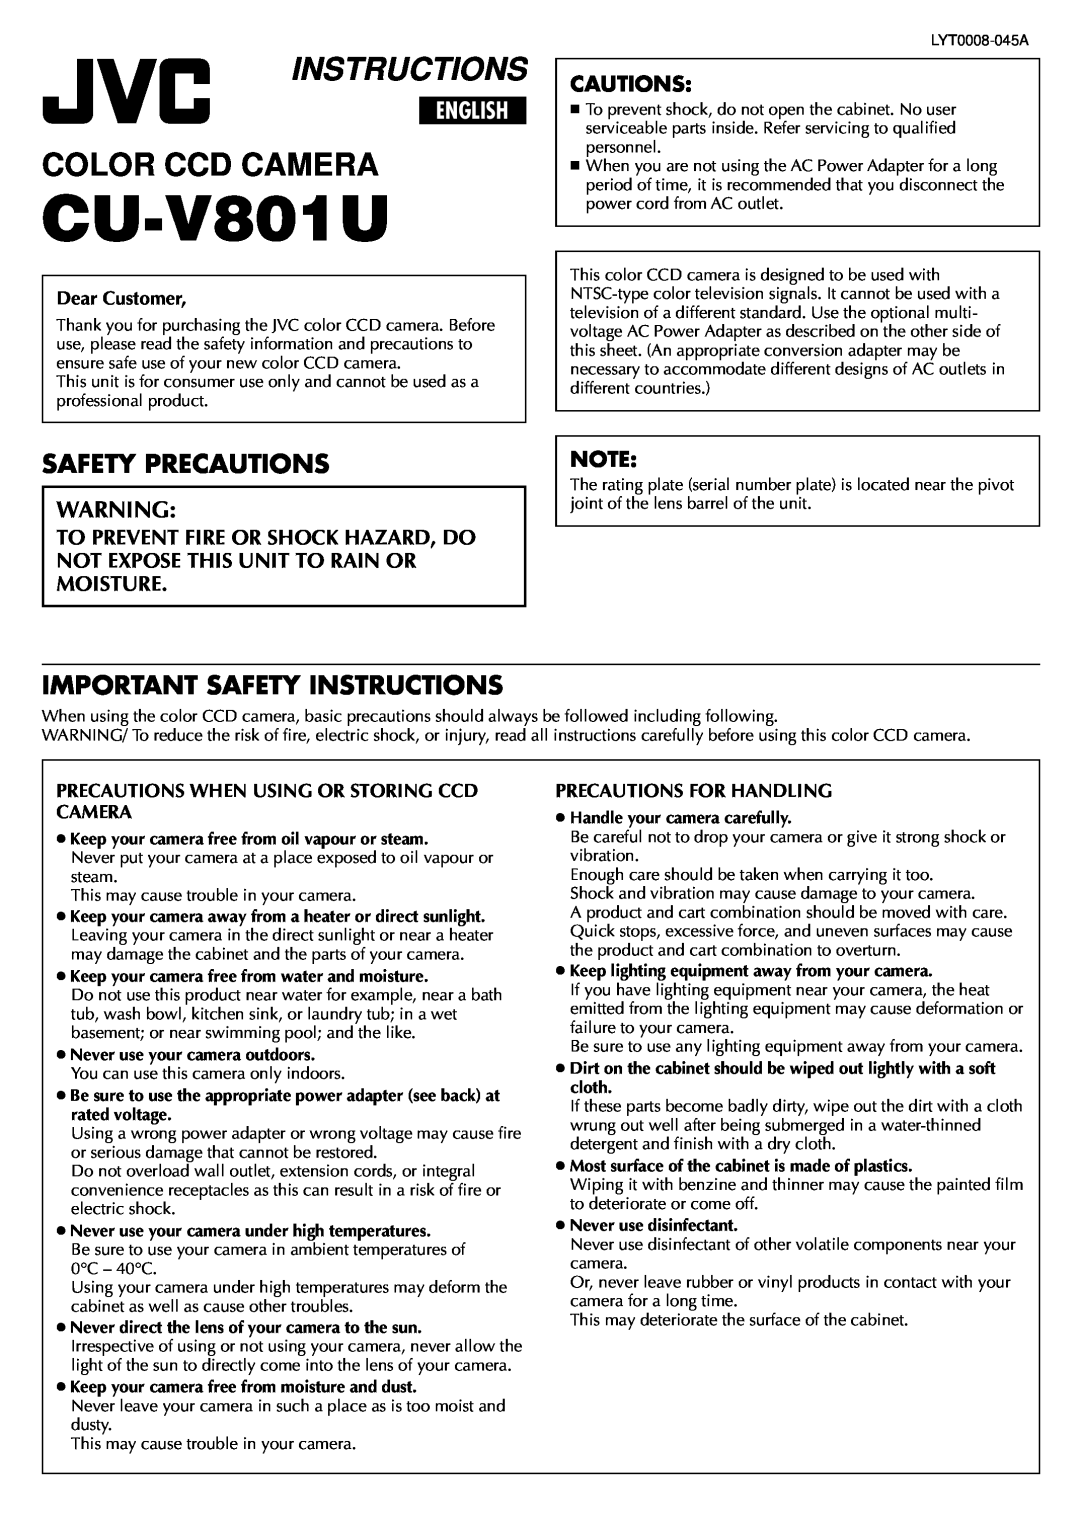 JVC CU-V801U important safety instructions Safety Precautions, Important Safety Instructions, English, Cautions 